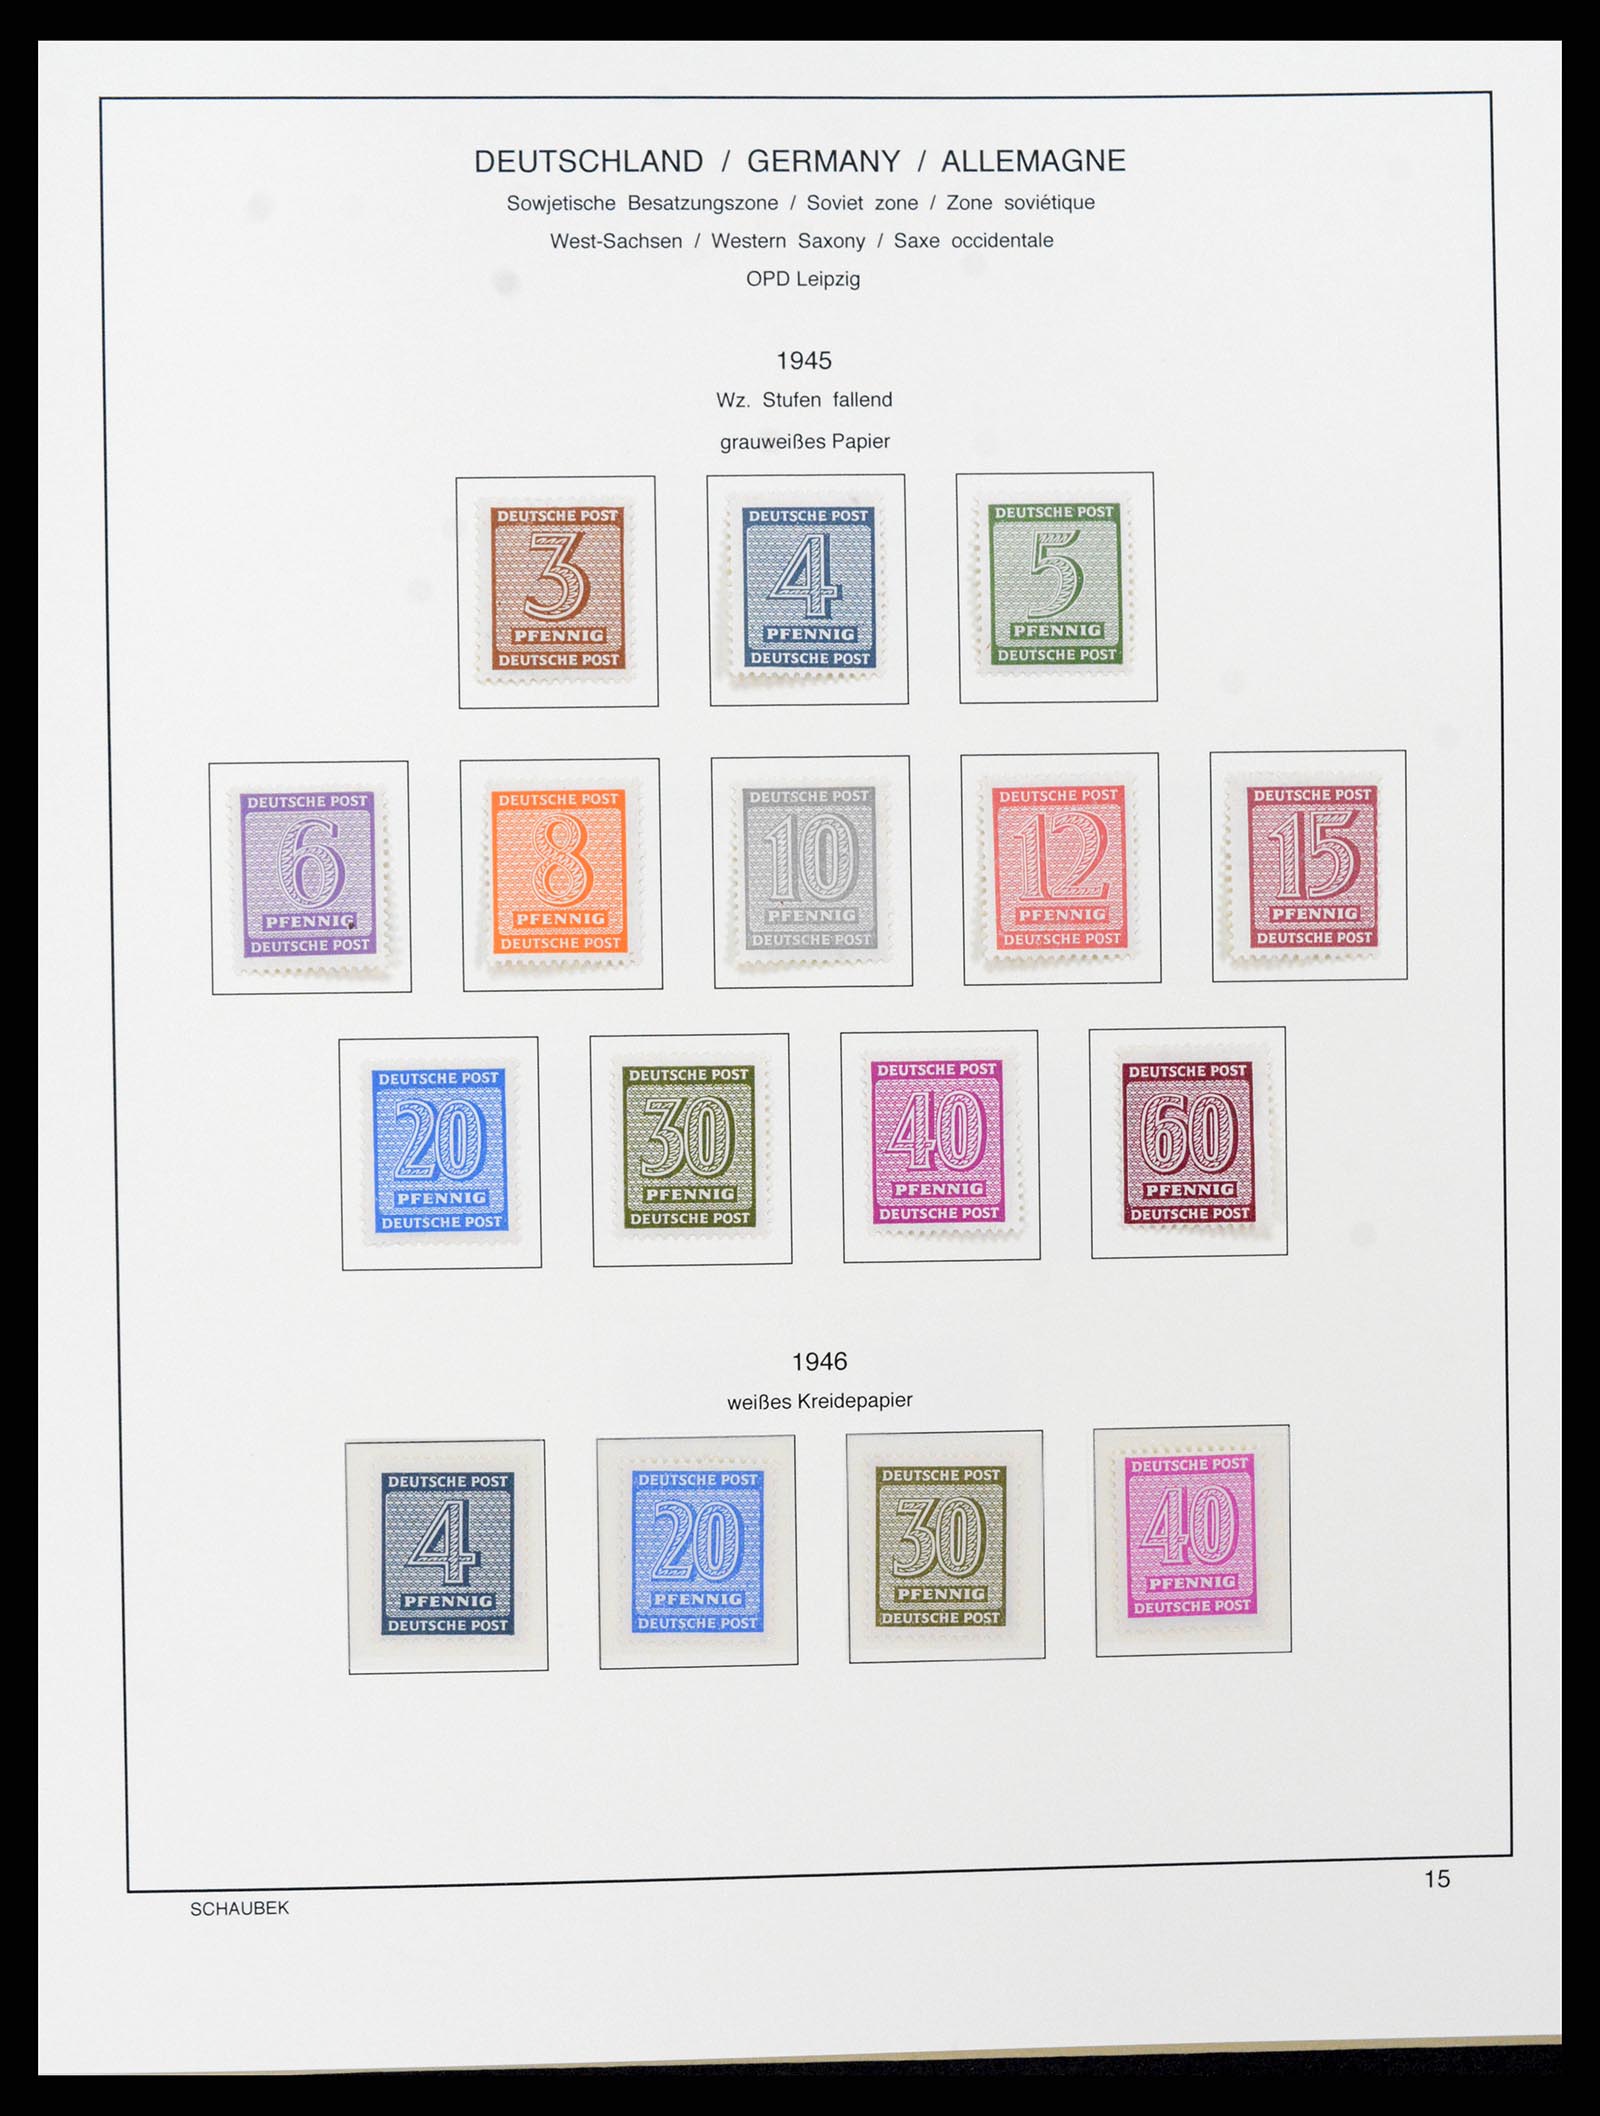 37645 039 - Stamp collection 37645 German Zones 1945-1949.